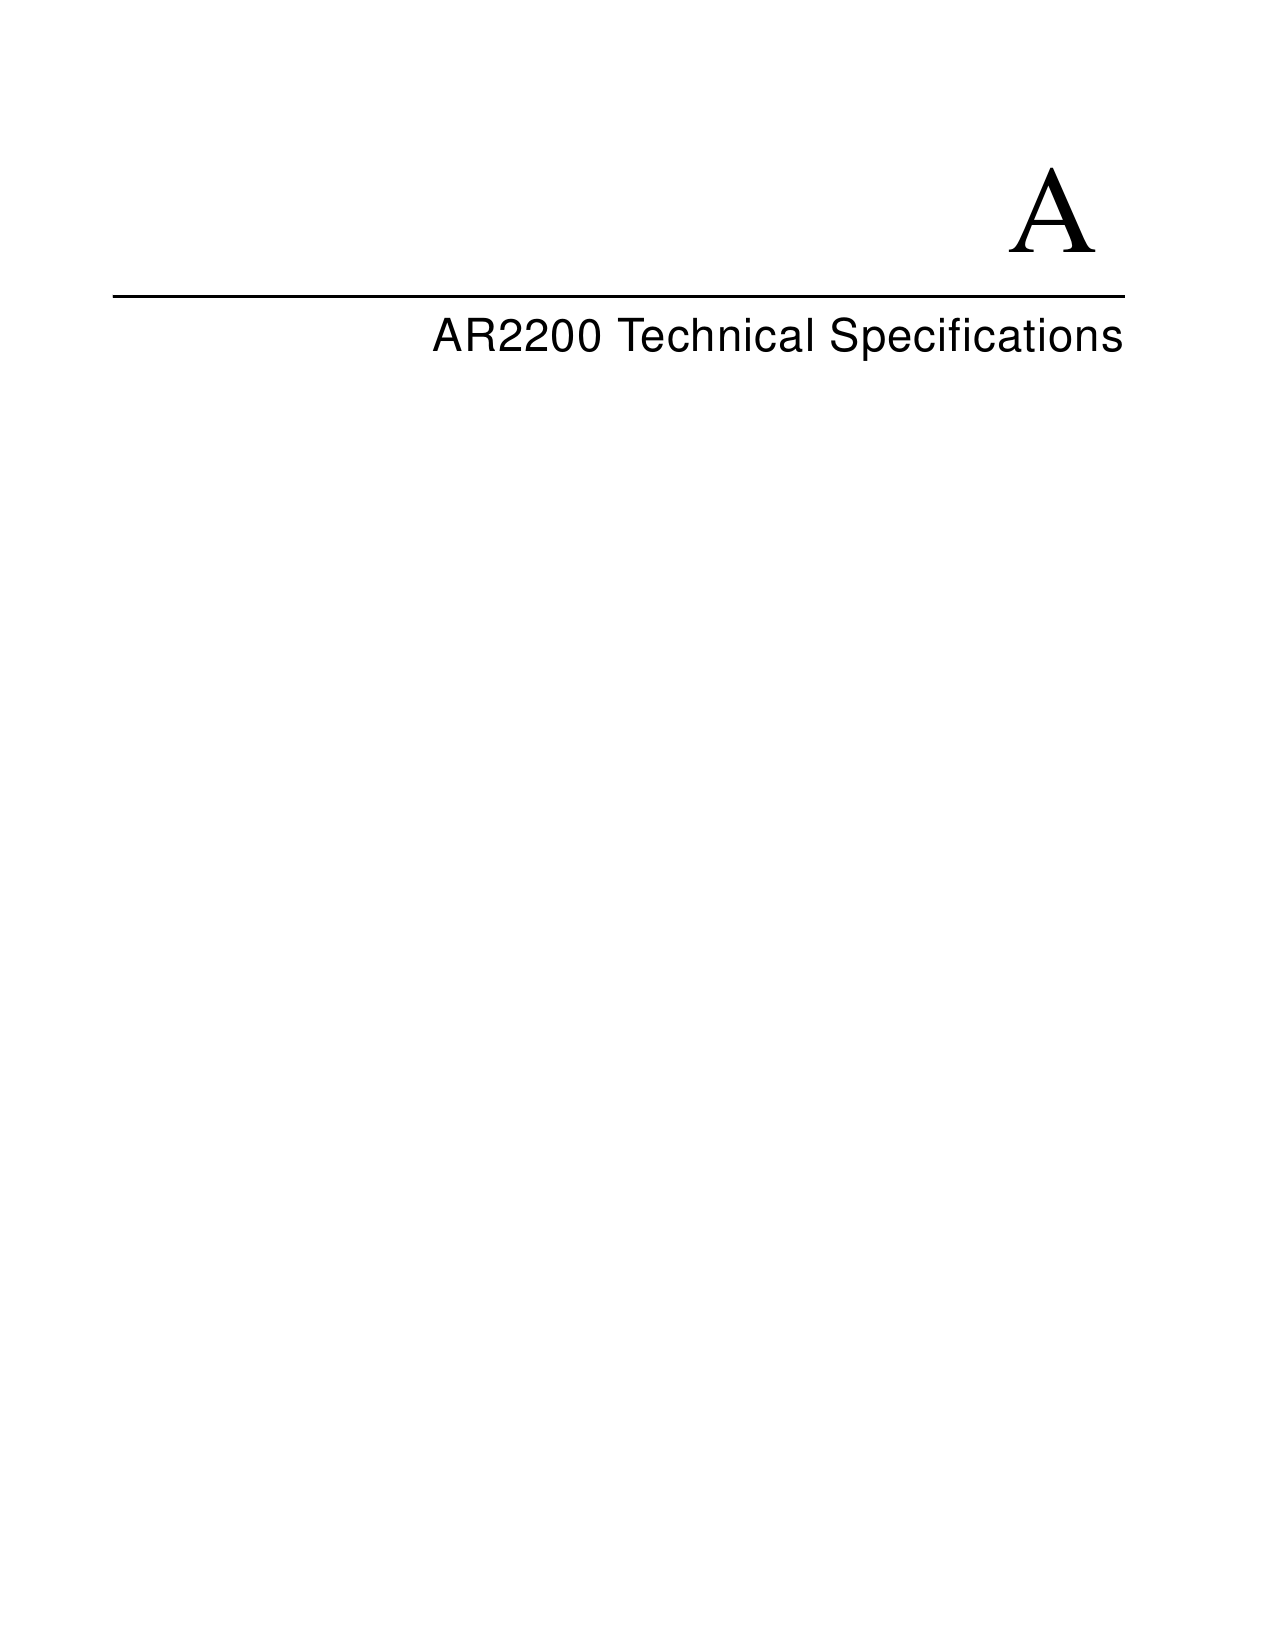 AAR2200 Technical Specifications